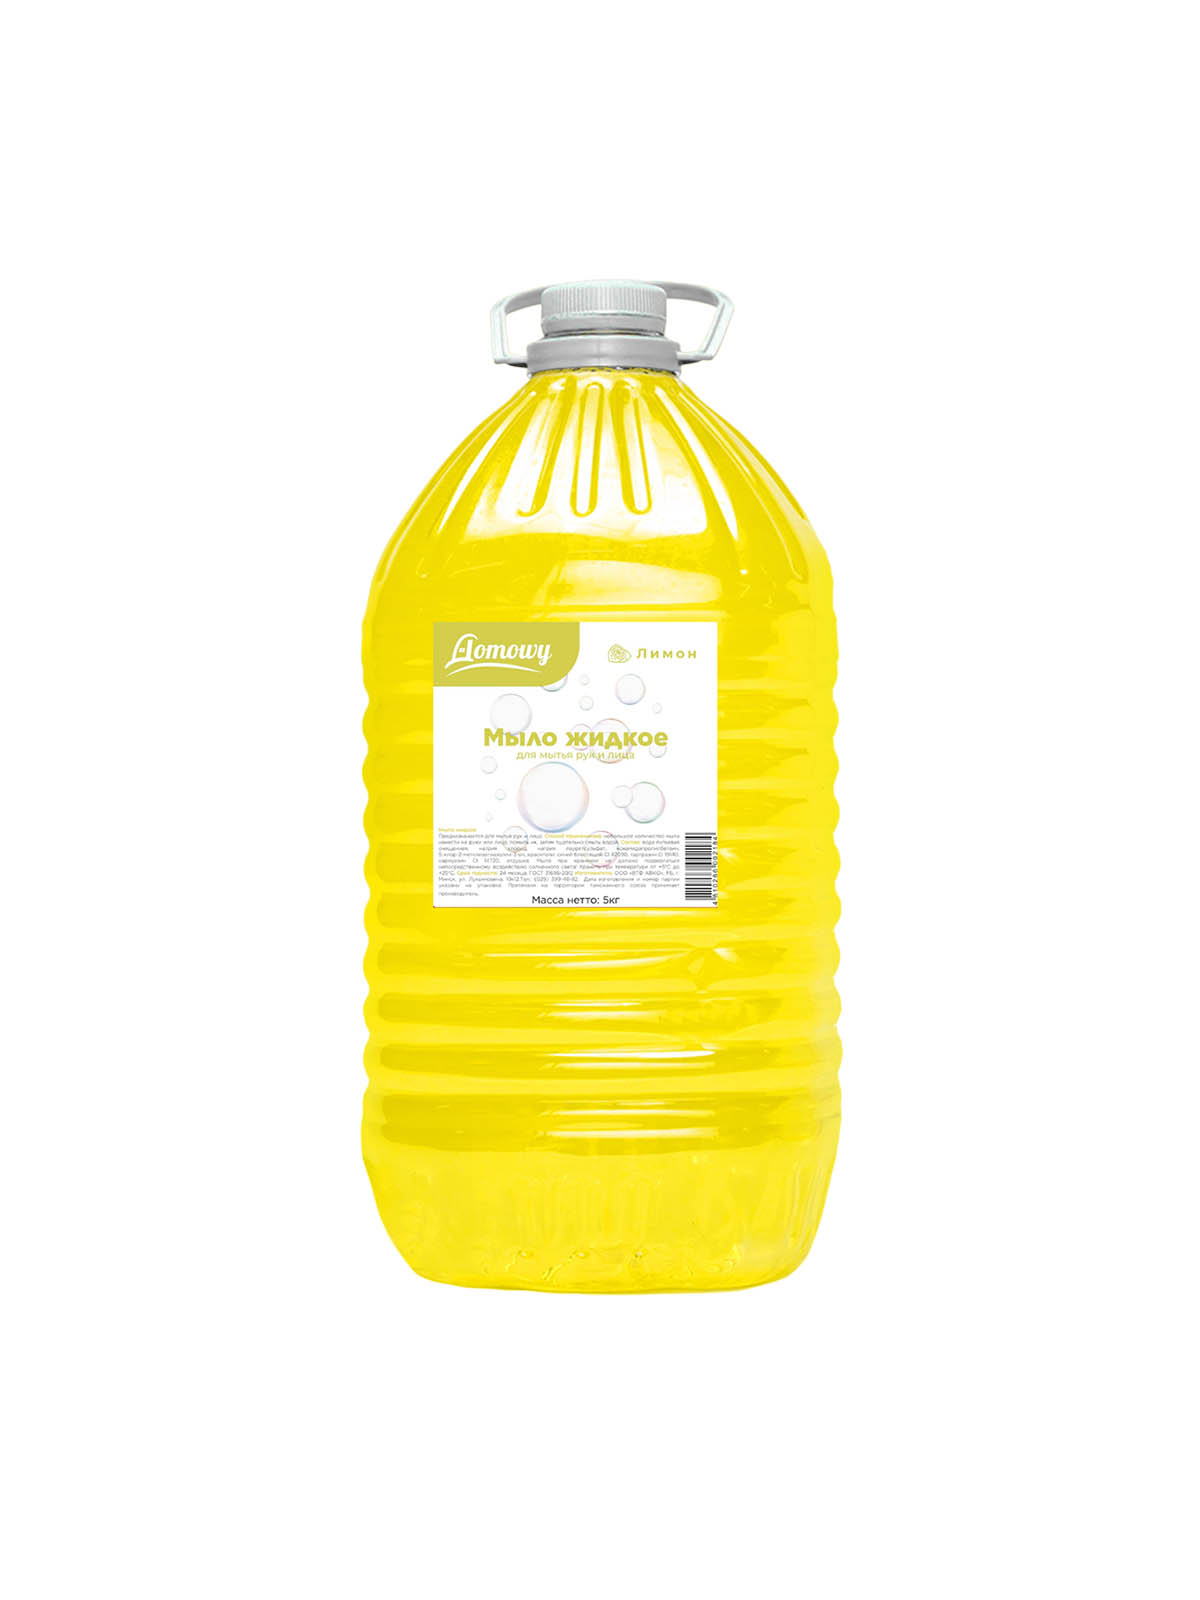 Мыло жидкое Domowy (Лимон), 5кг